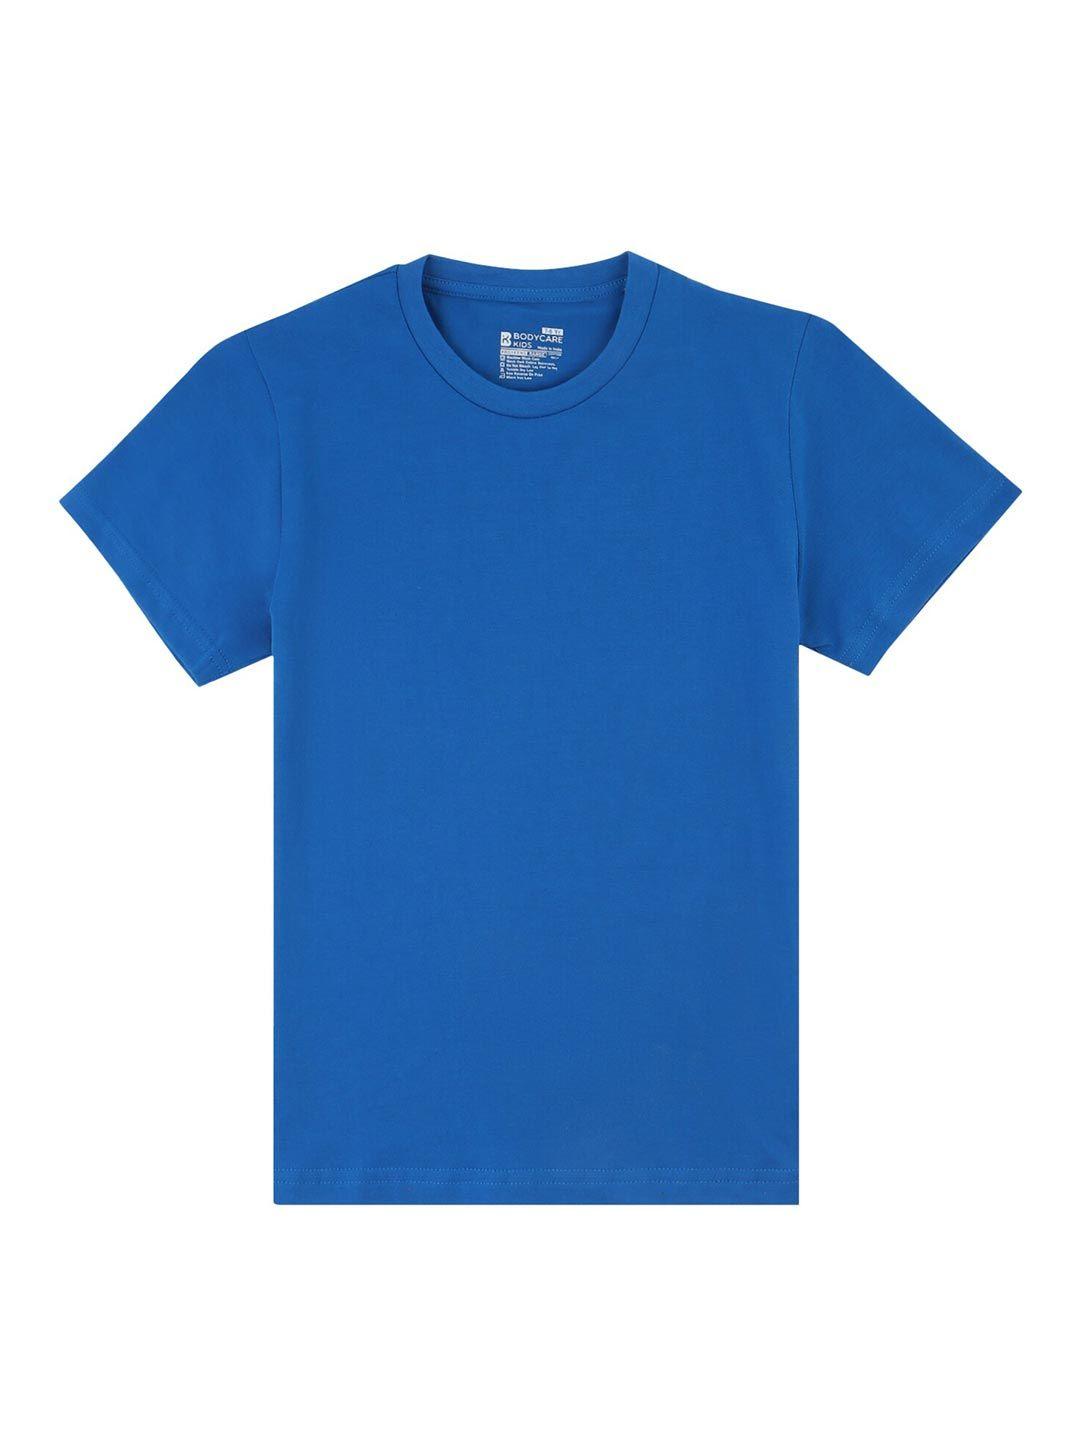 proteens boys blue cotton t-shirt